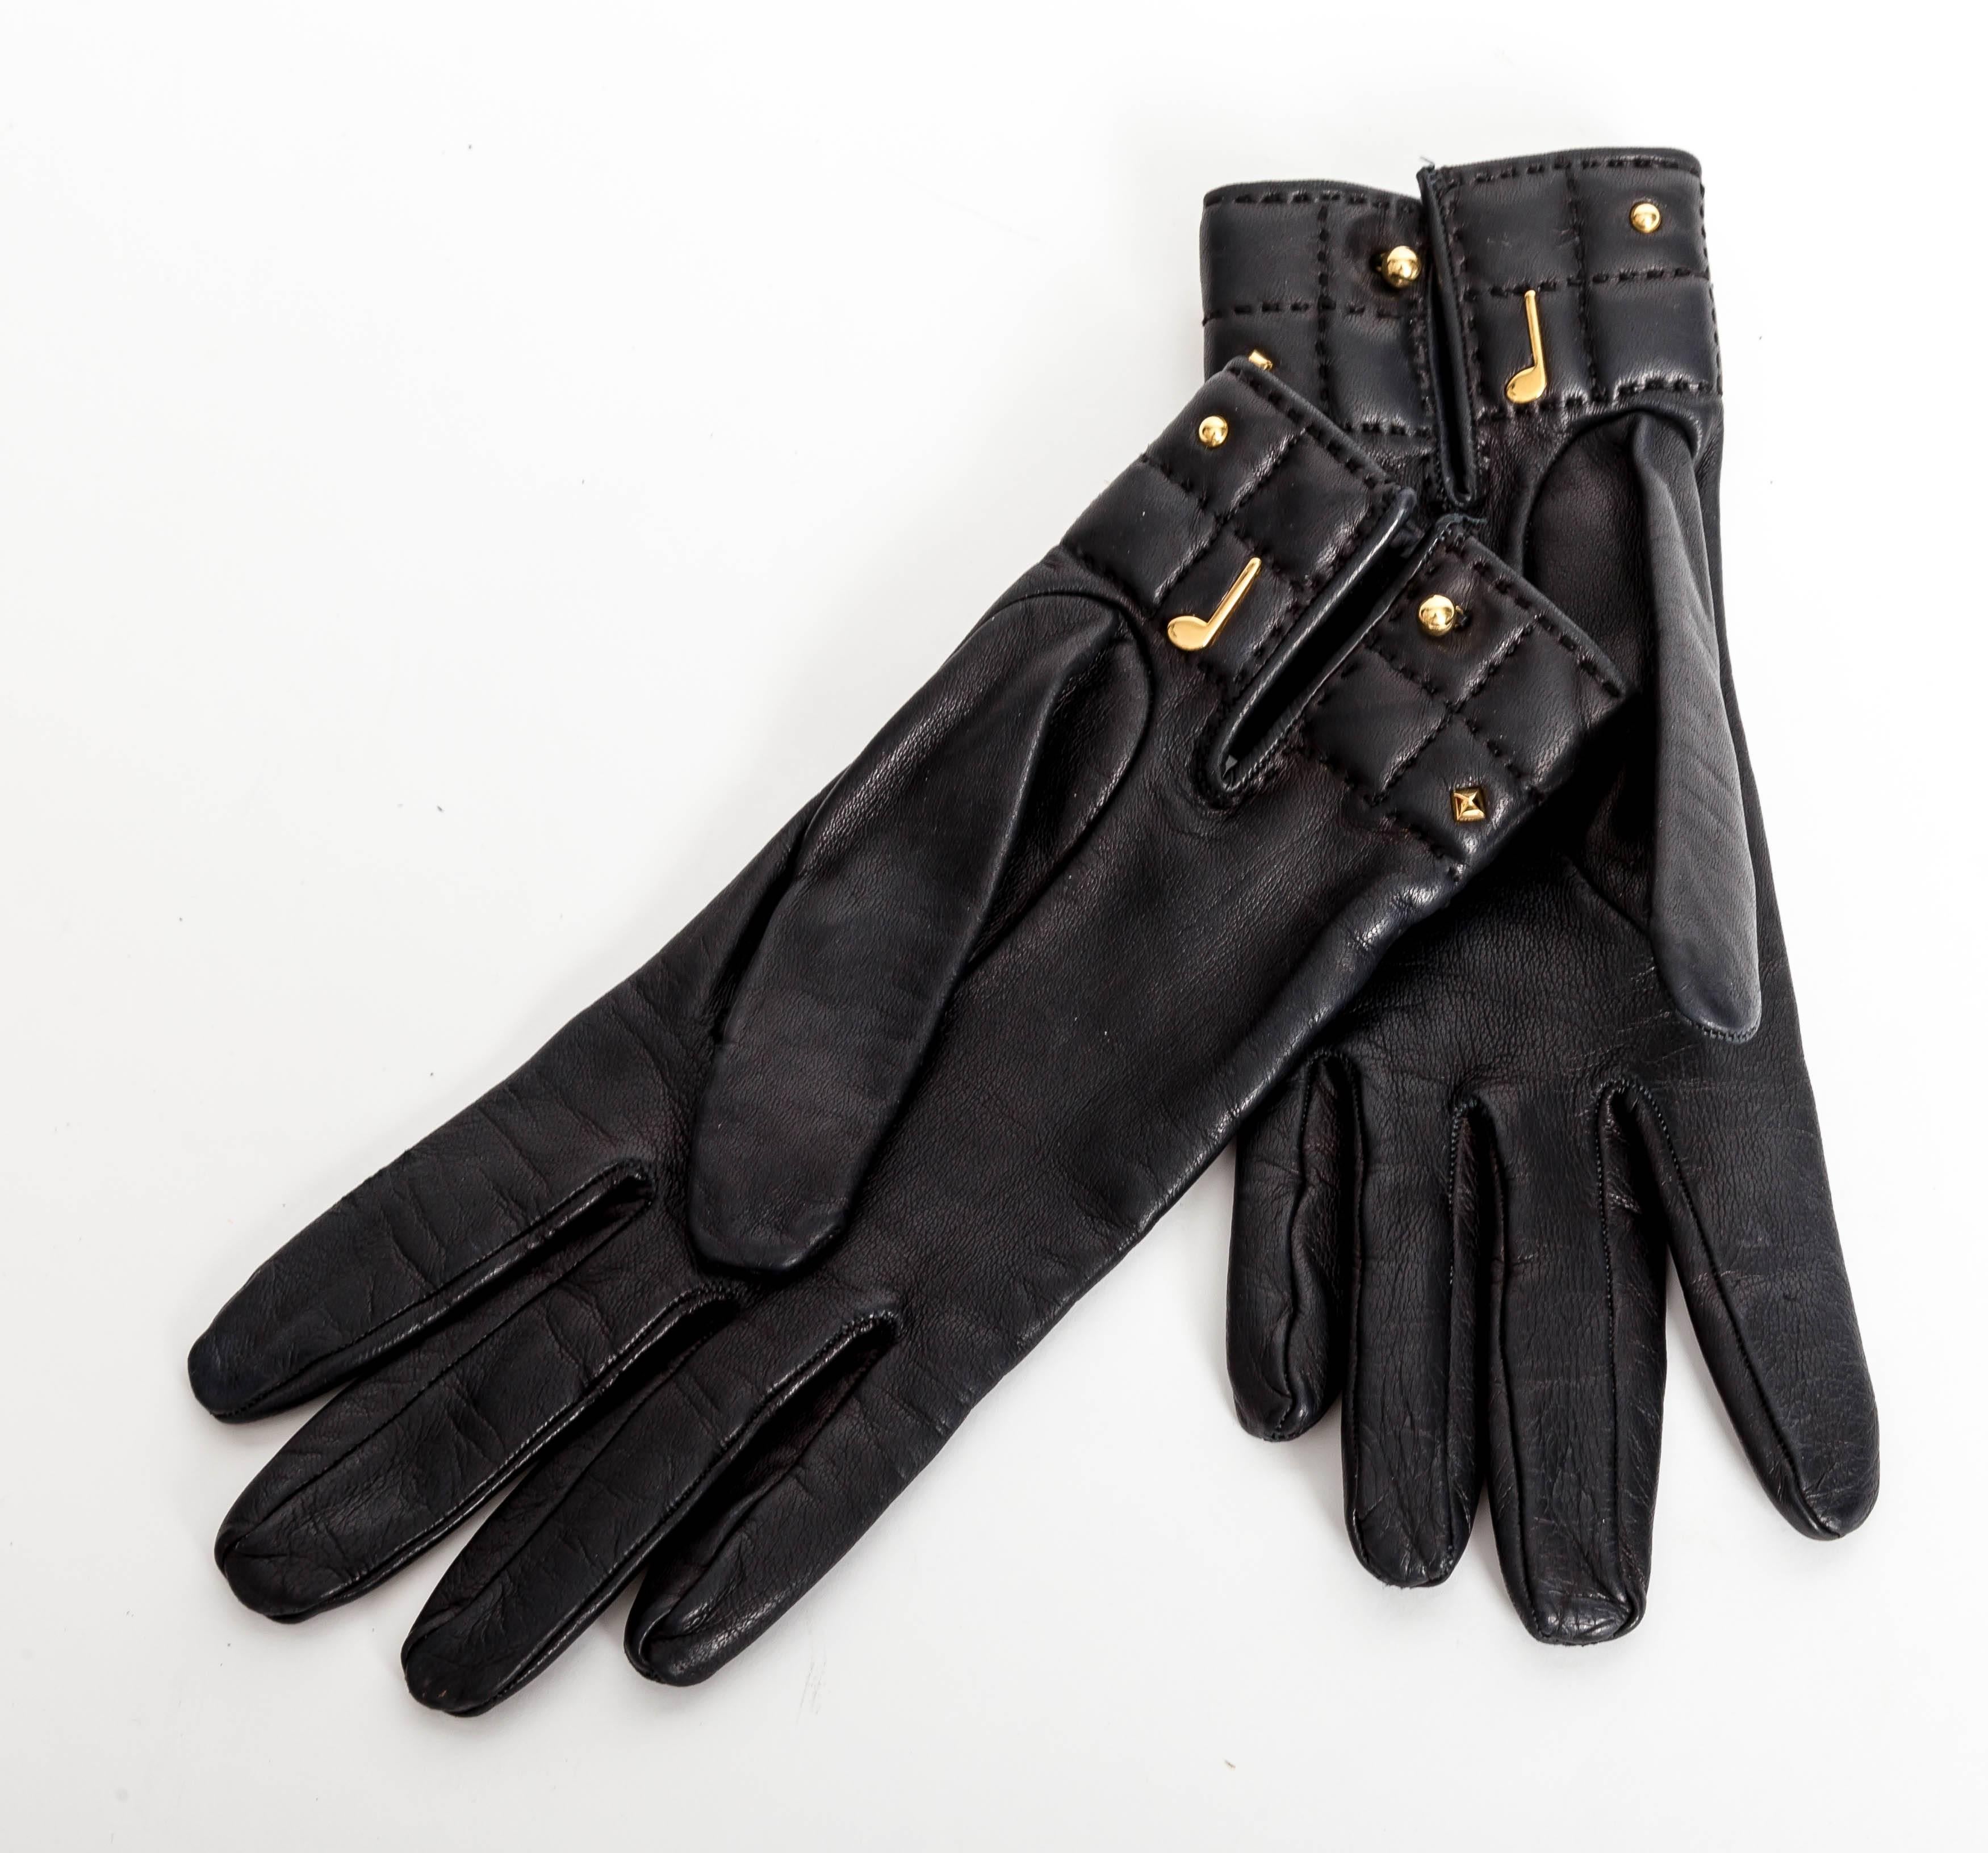 Beautiful Hermes Black Leather Medoru Gloves
Size Small
